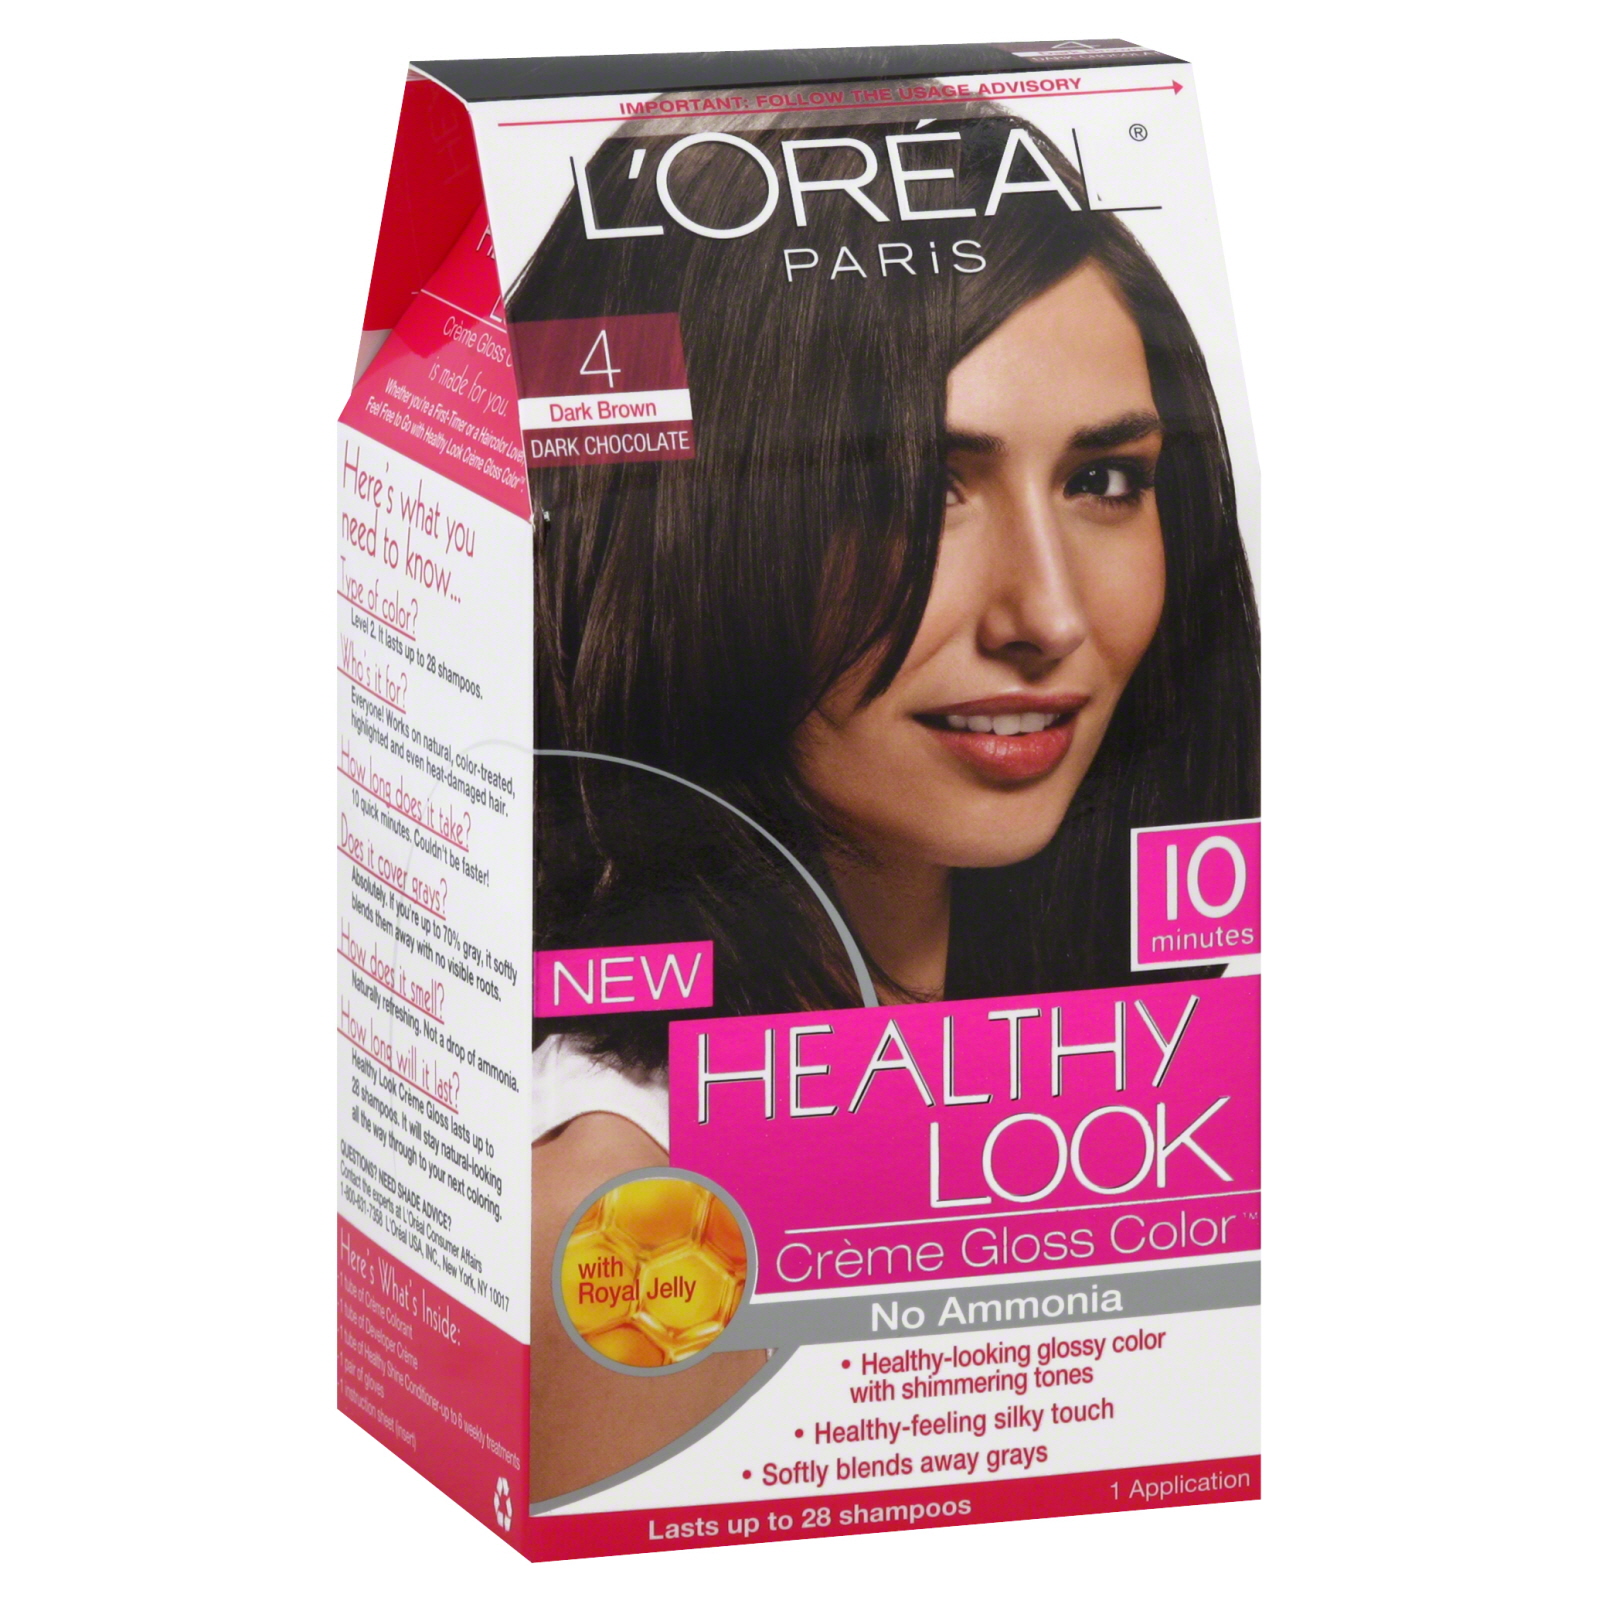 L'Oreal Healthy Look Hair Dye, Creme Gloss Color, Dark Brown 4, 1 application